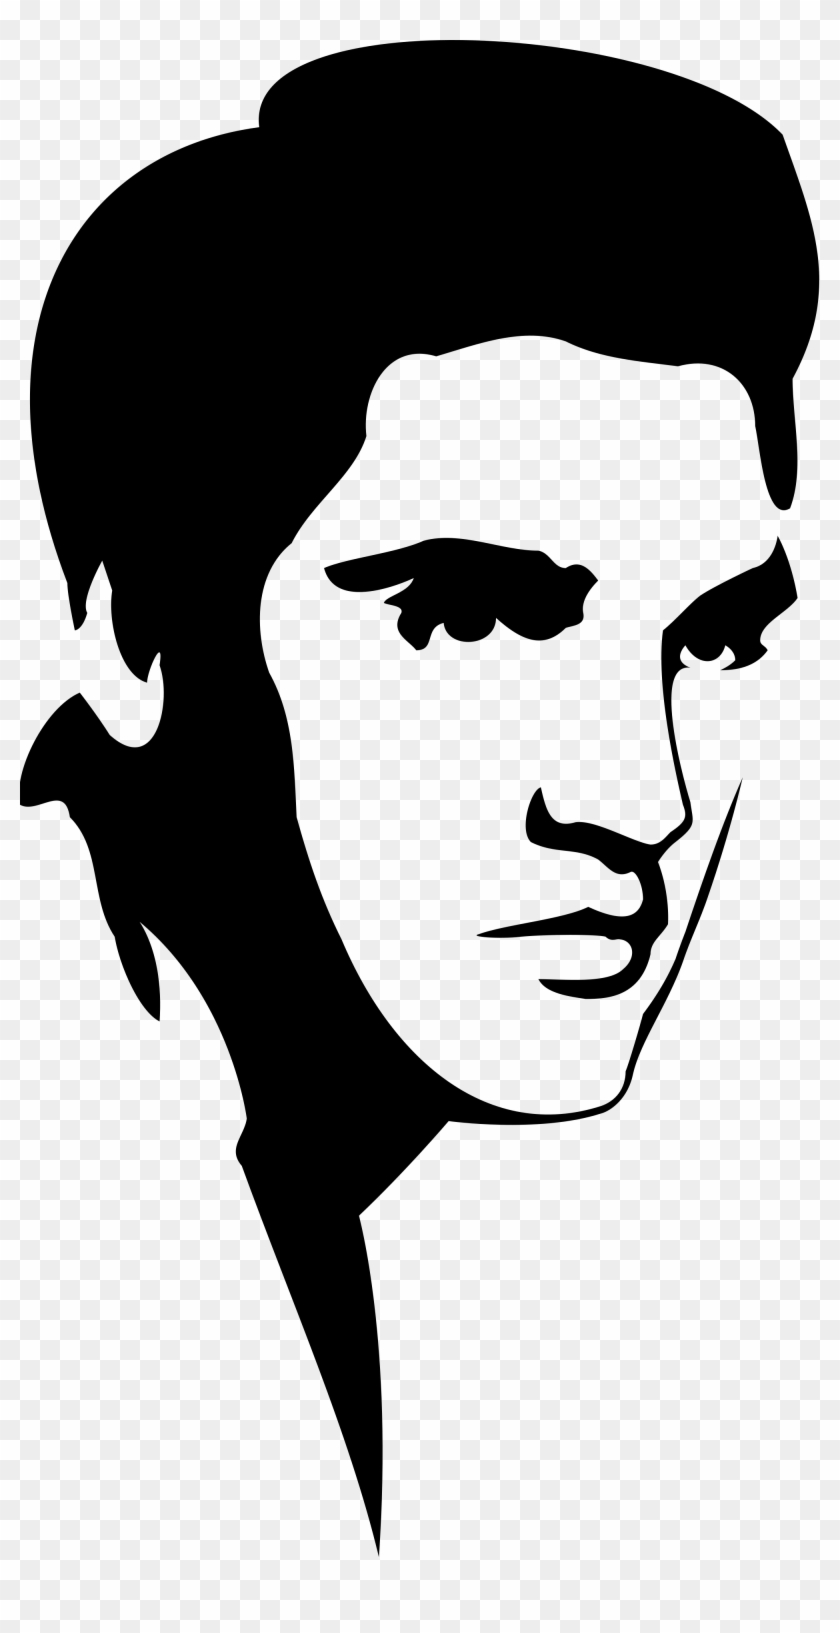 An Elvis Presley Stencil, Made With Black Spray Paint - Elvis Presley Black And White Portrait #218205